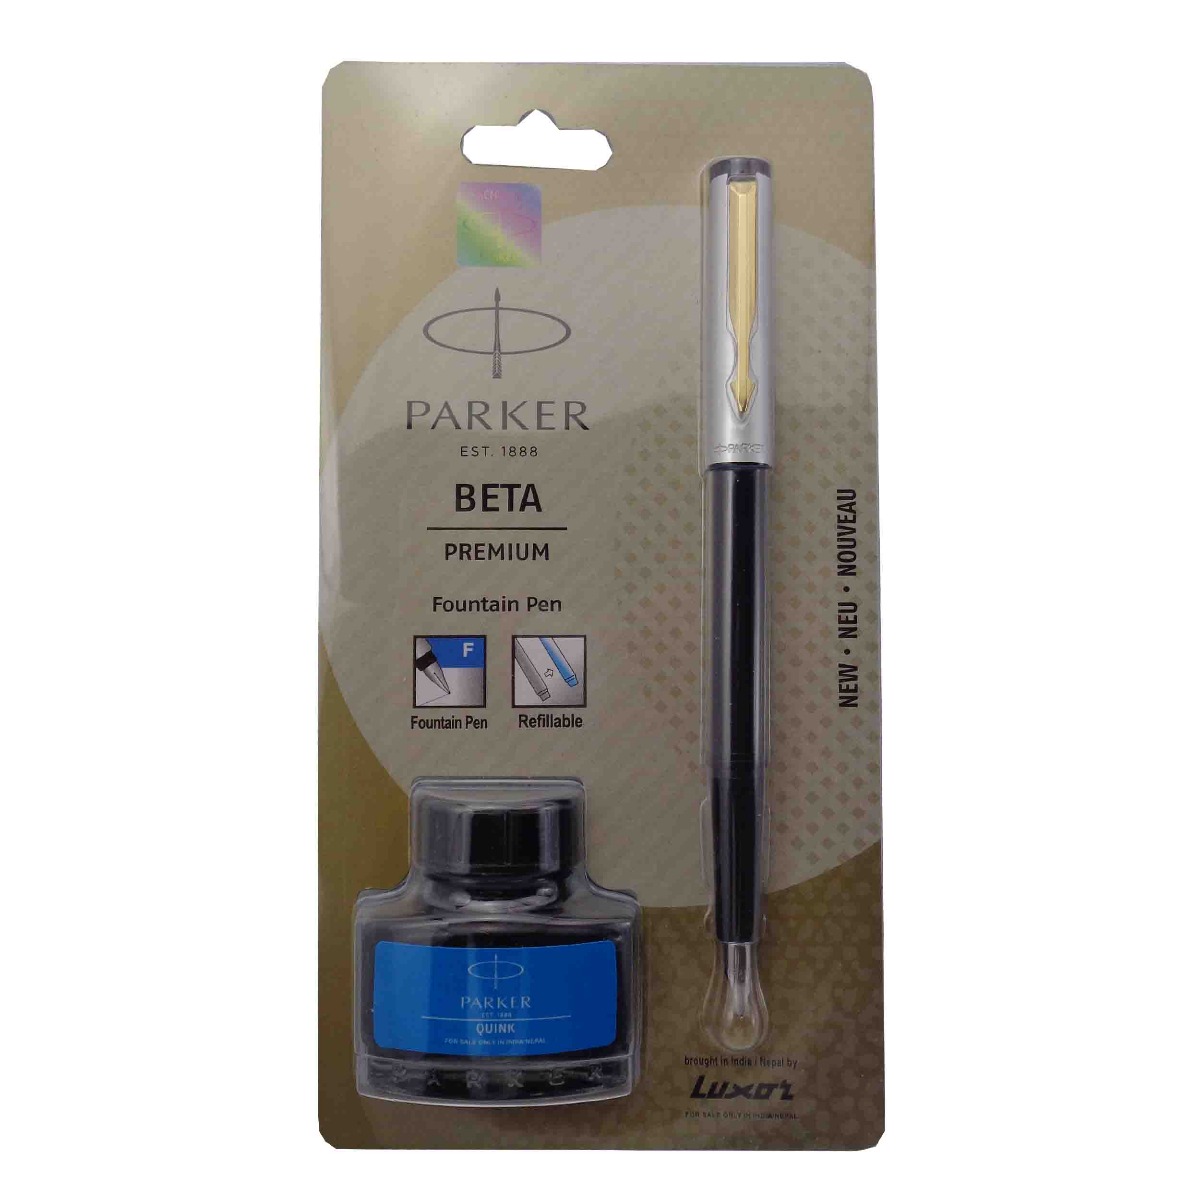 Parker Model: 15483 Beta premium Black color body with silver color cap GT fine tip cap type fountain pen